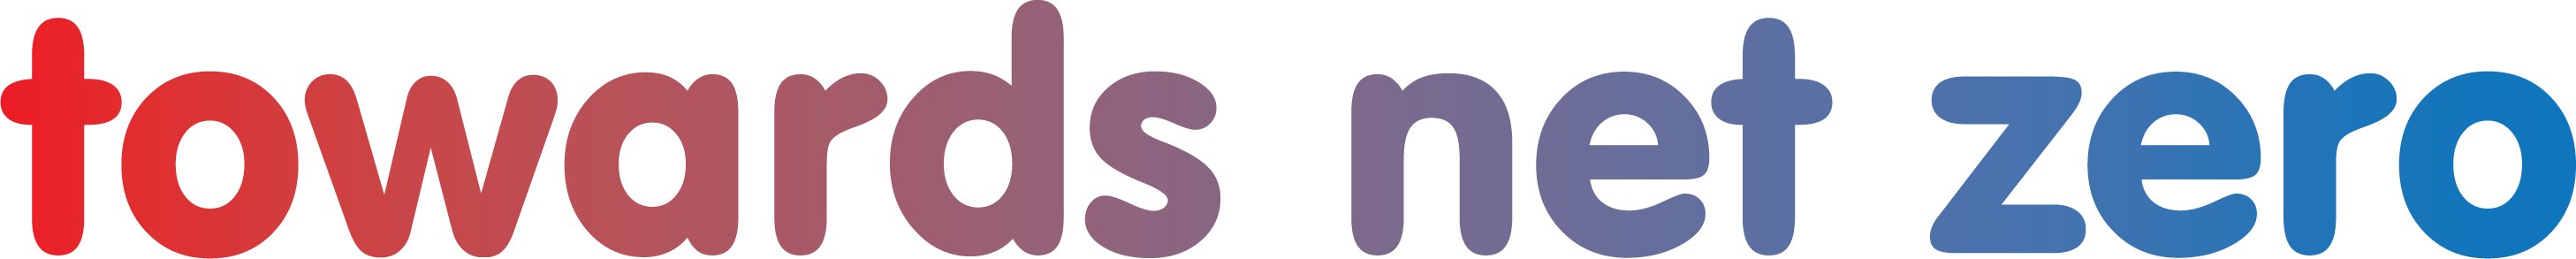 Linked logo for TOWARDS NET ZERO LIMITED